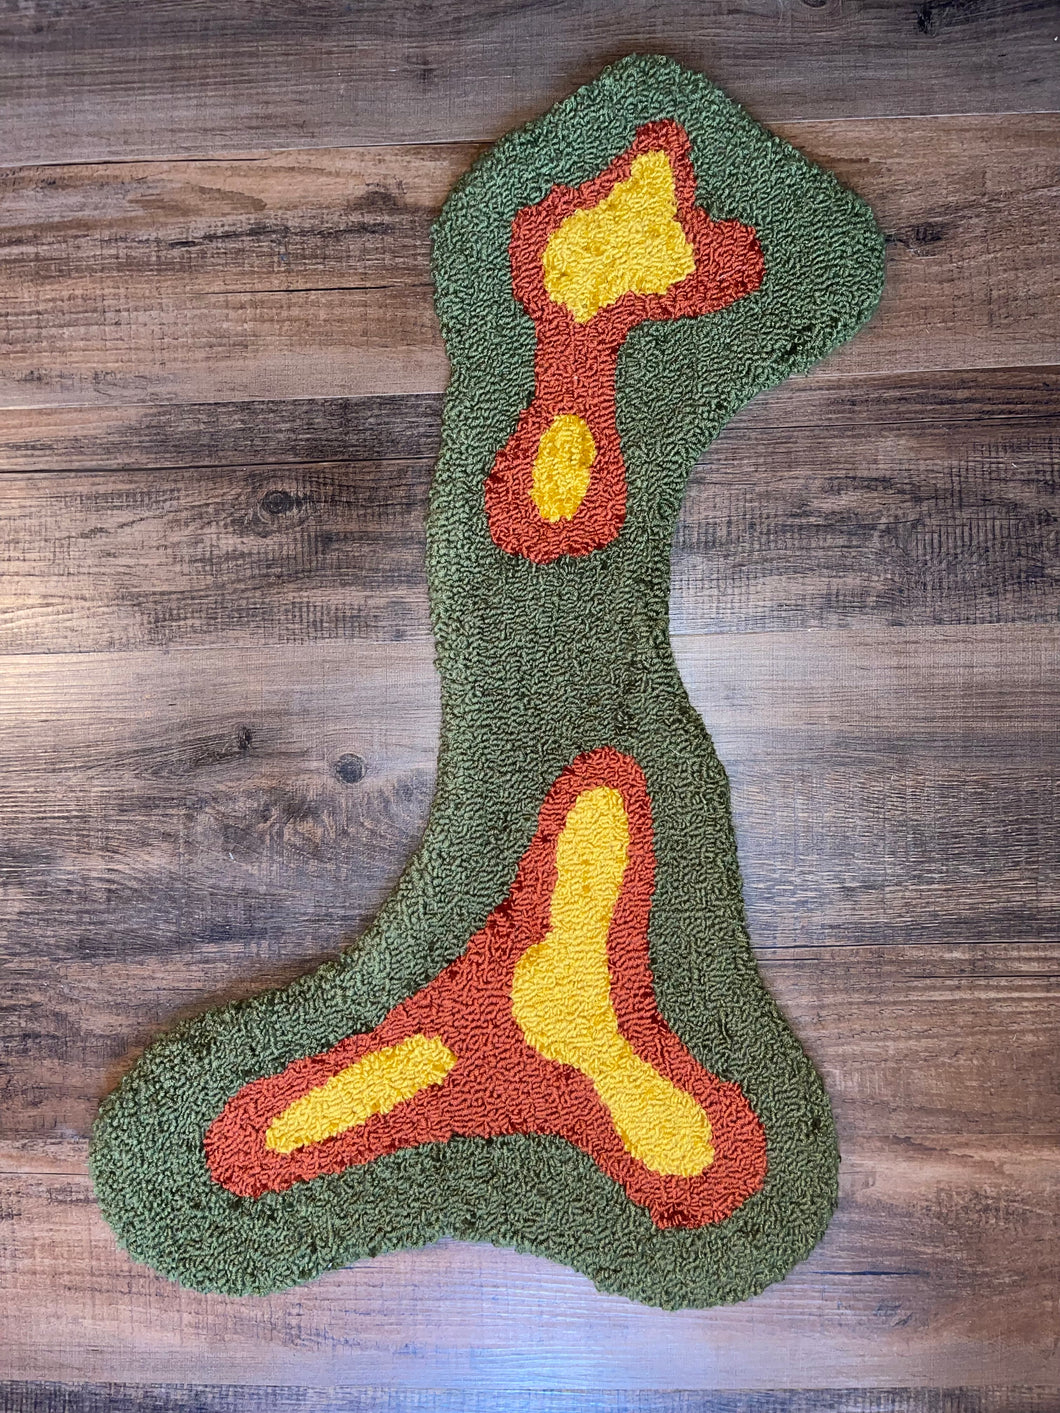 Small mid century modern rug